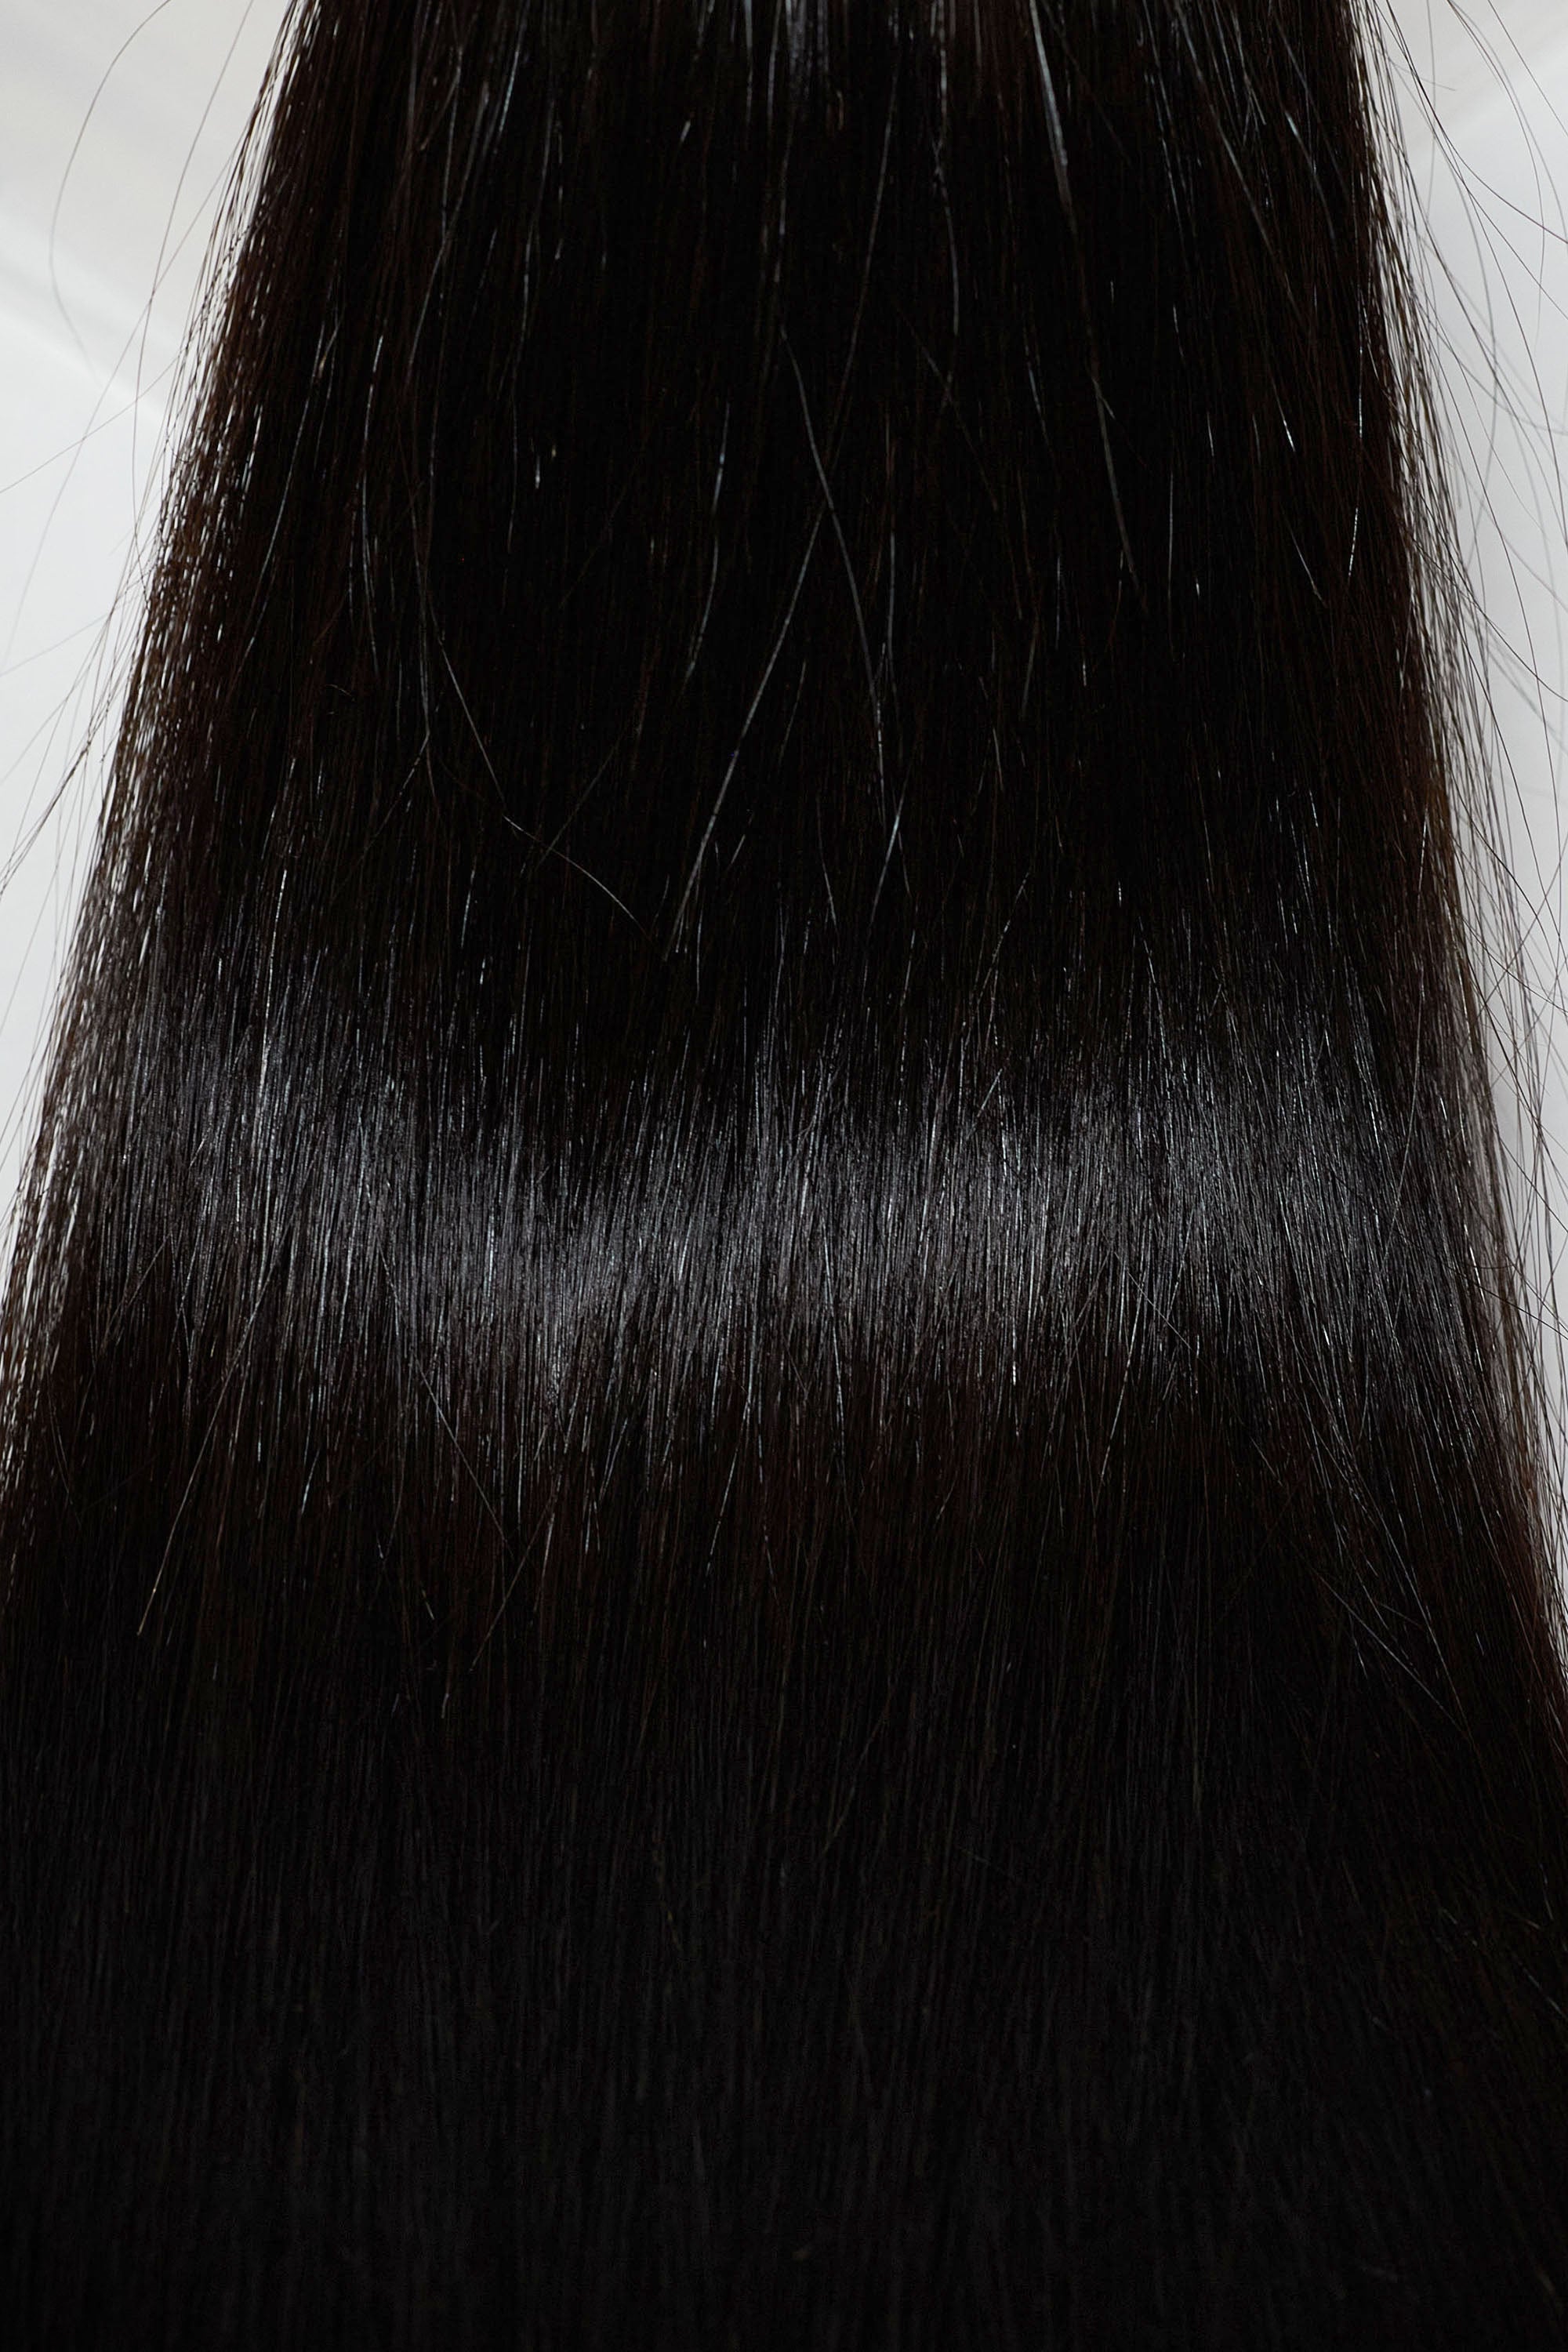 Behair professional Bulk hair "Premium" 18" (45cm) Natural Straight Jet Black #1 - 25g hair extensions